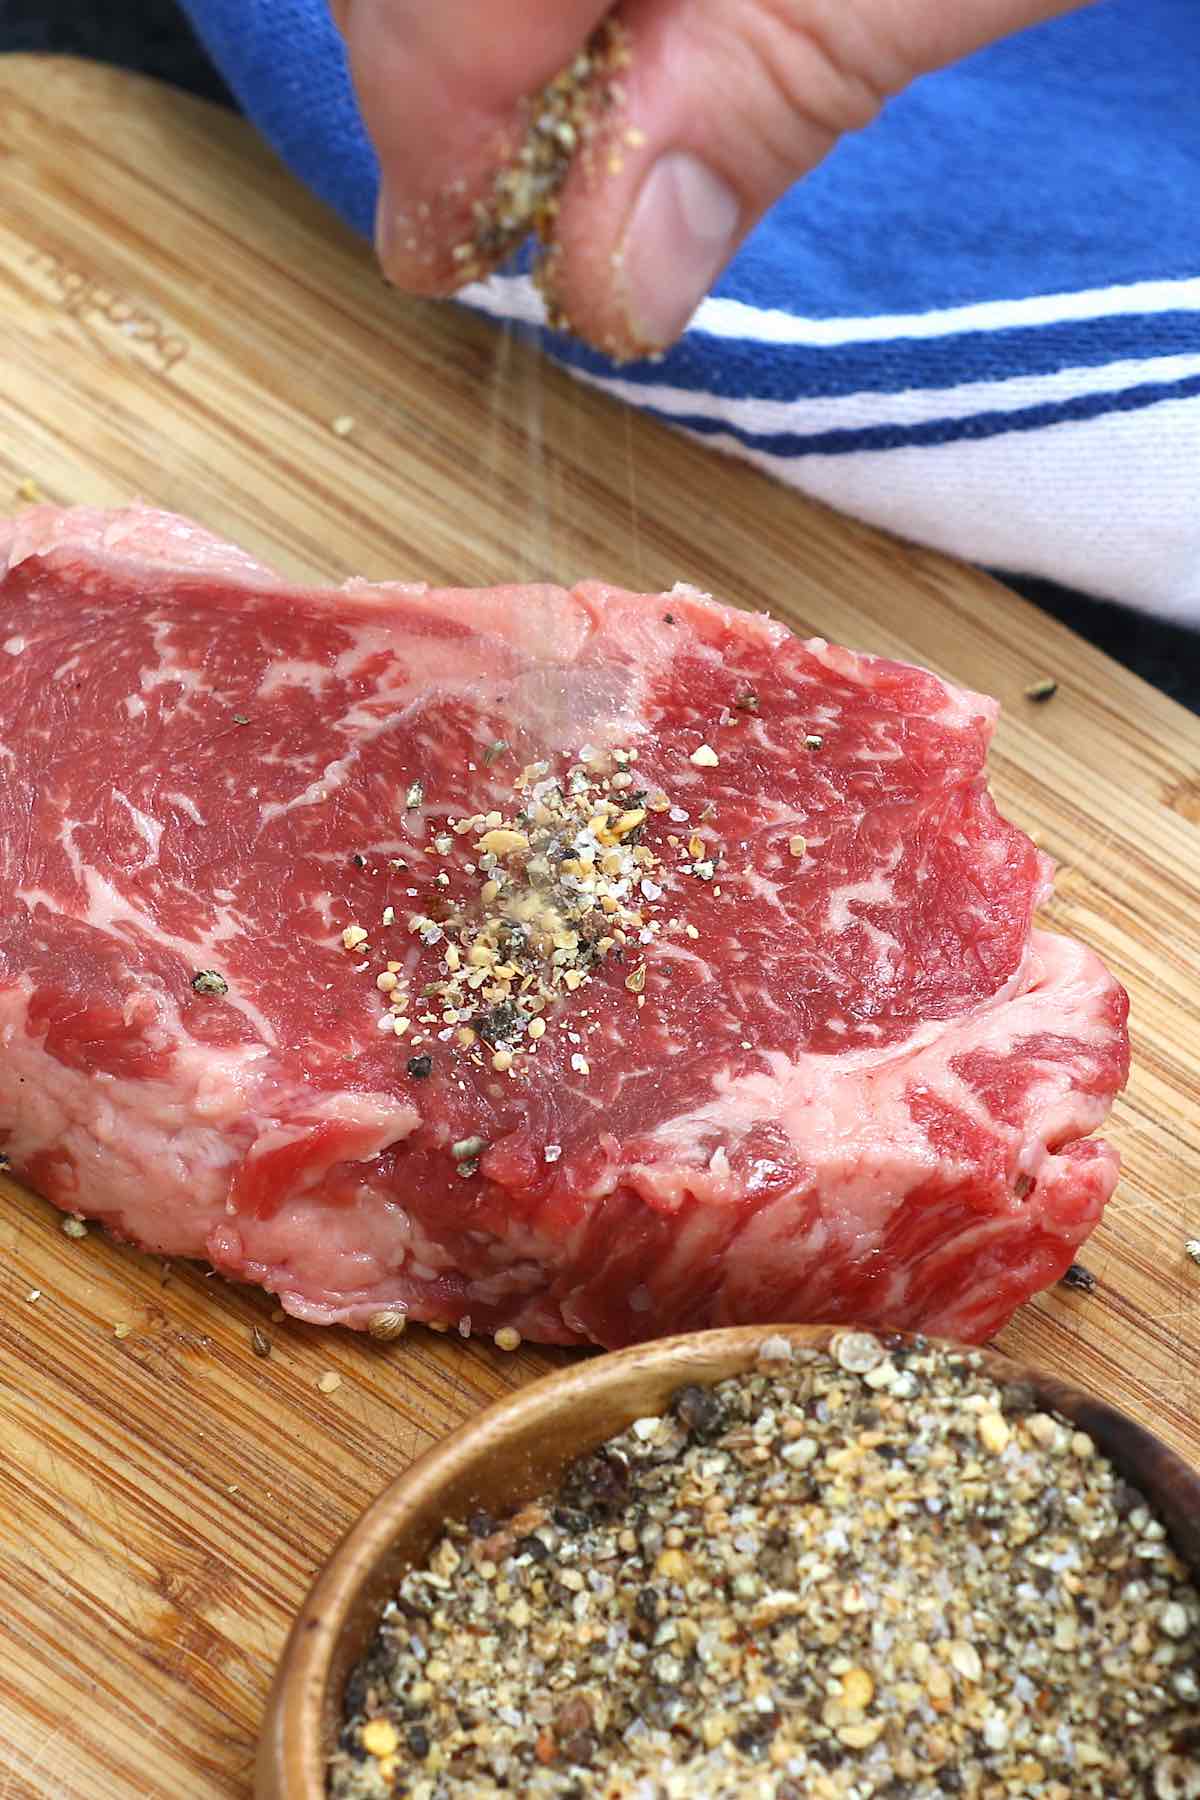 Adding Montreal steak spice to a raw striploin steak